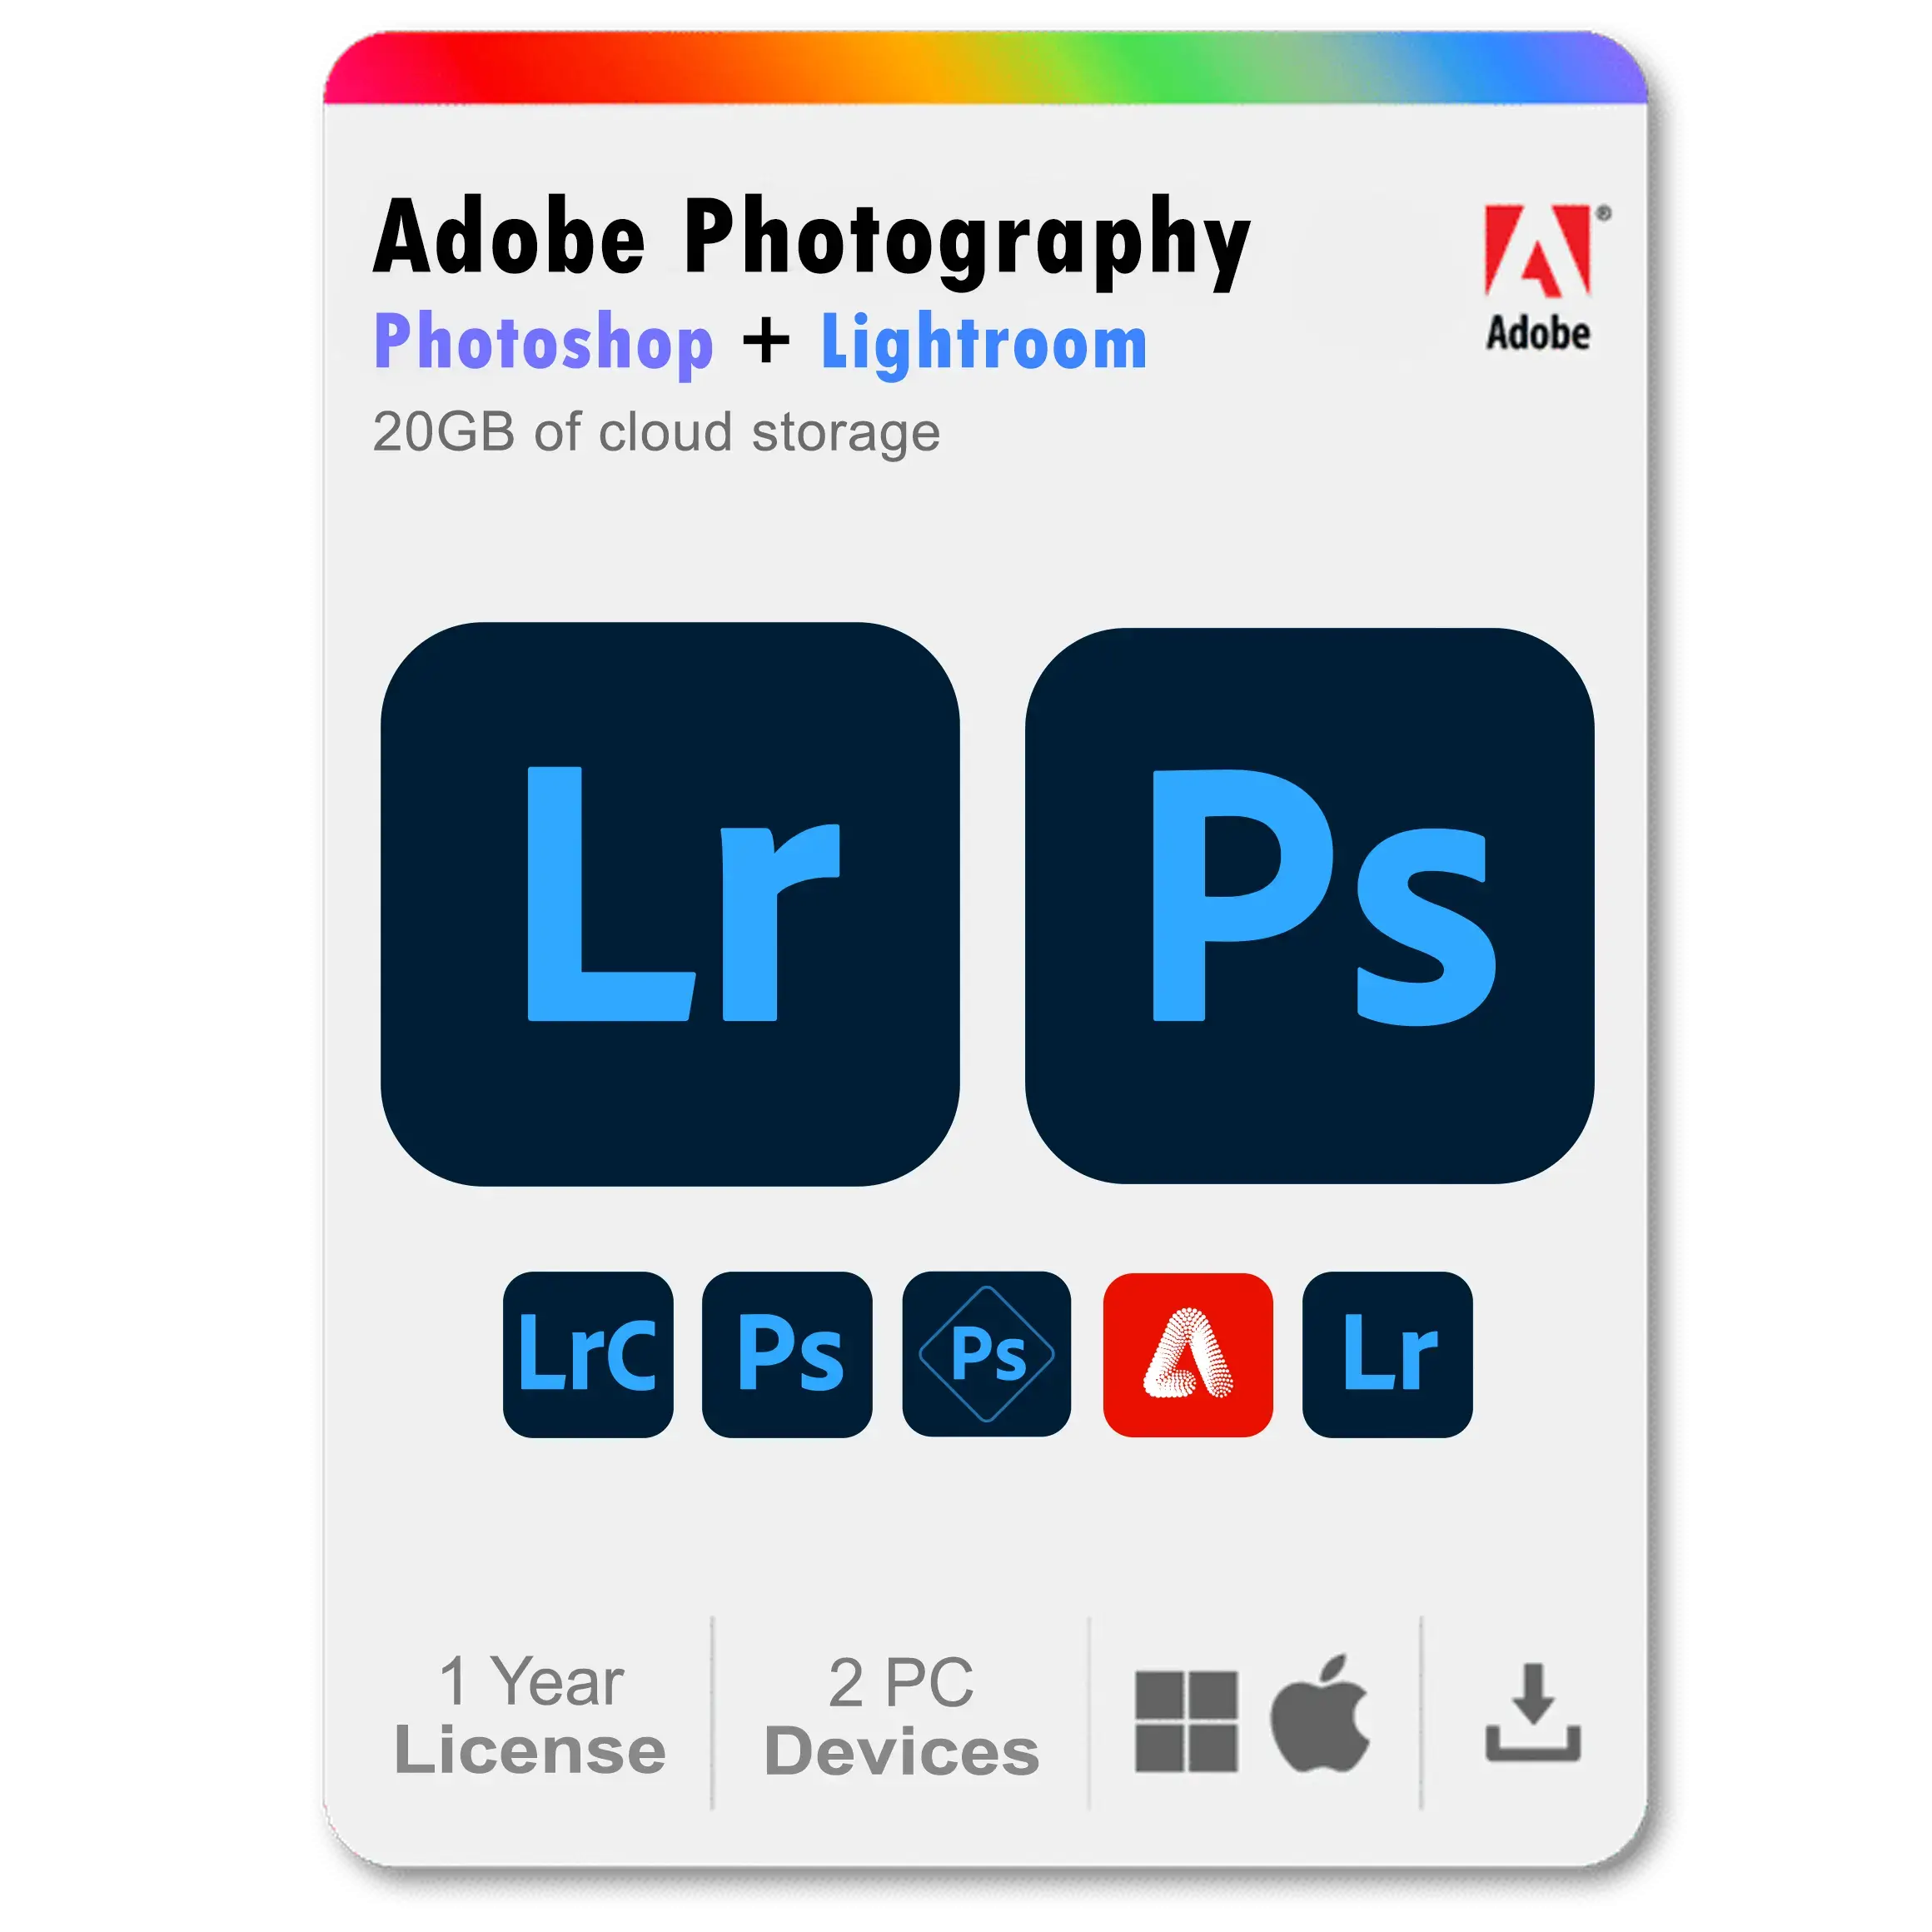 Adobe Photography